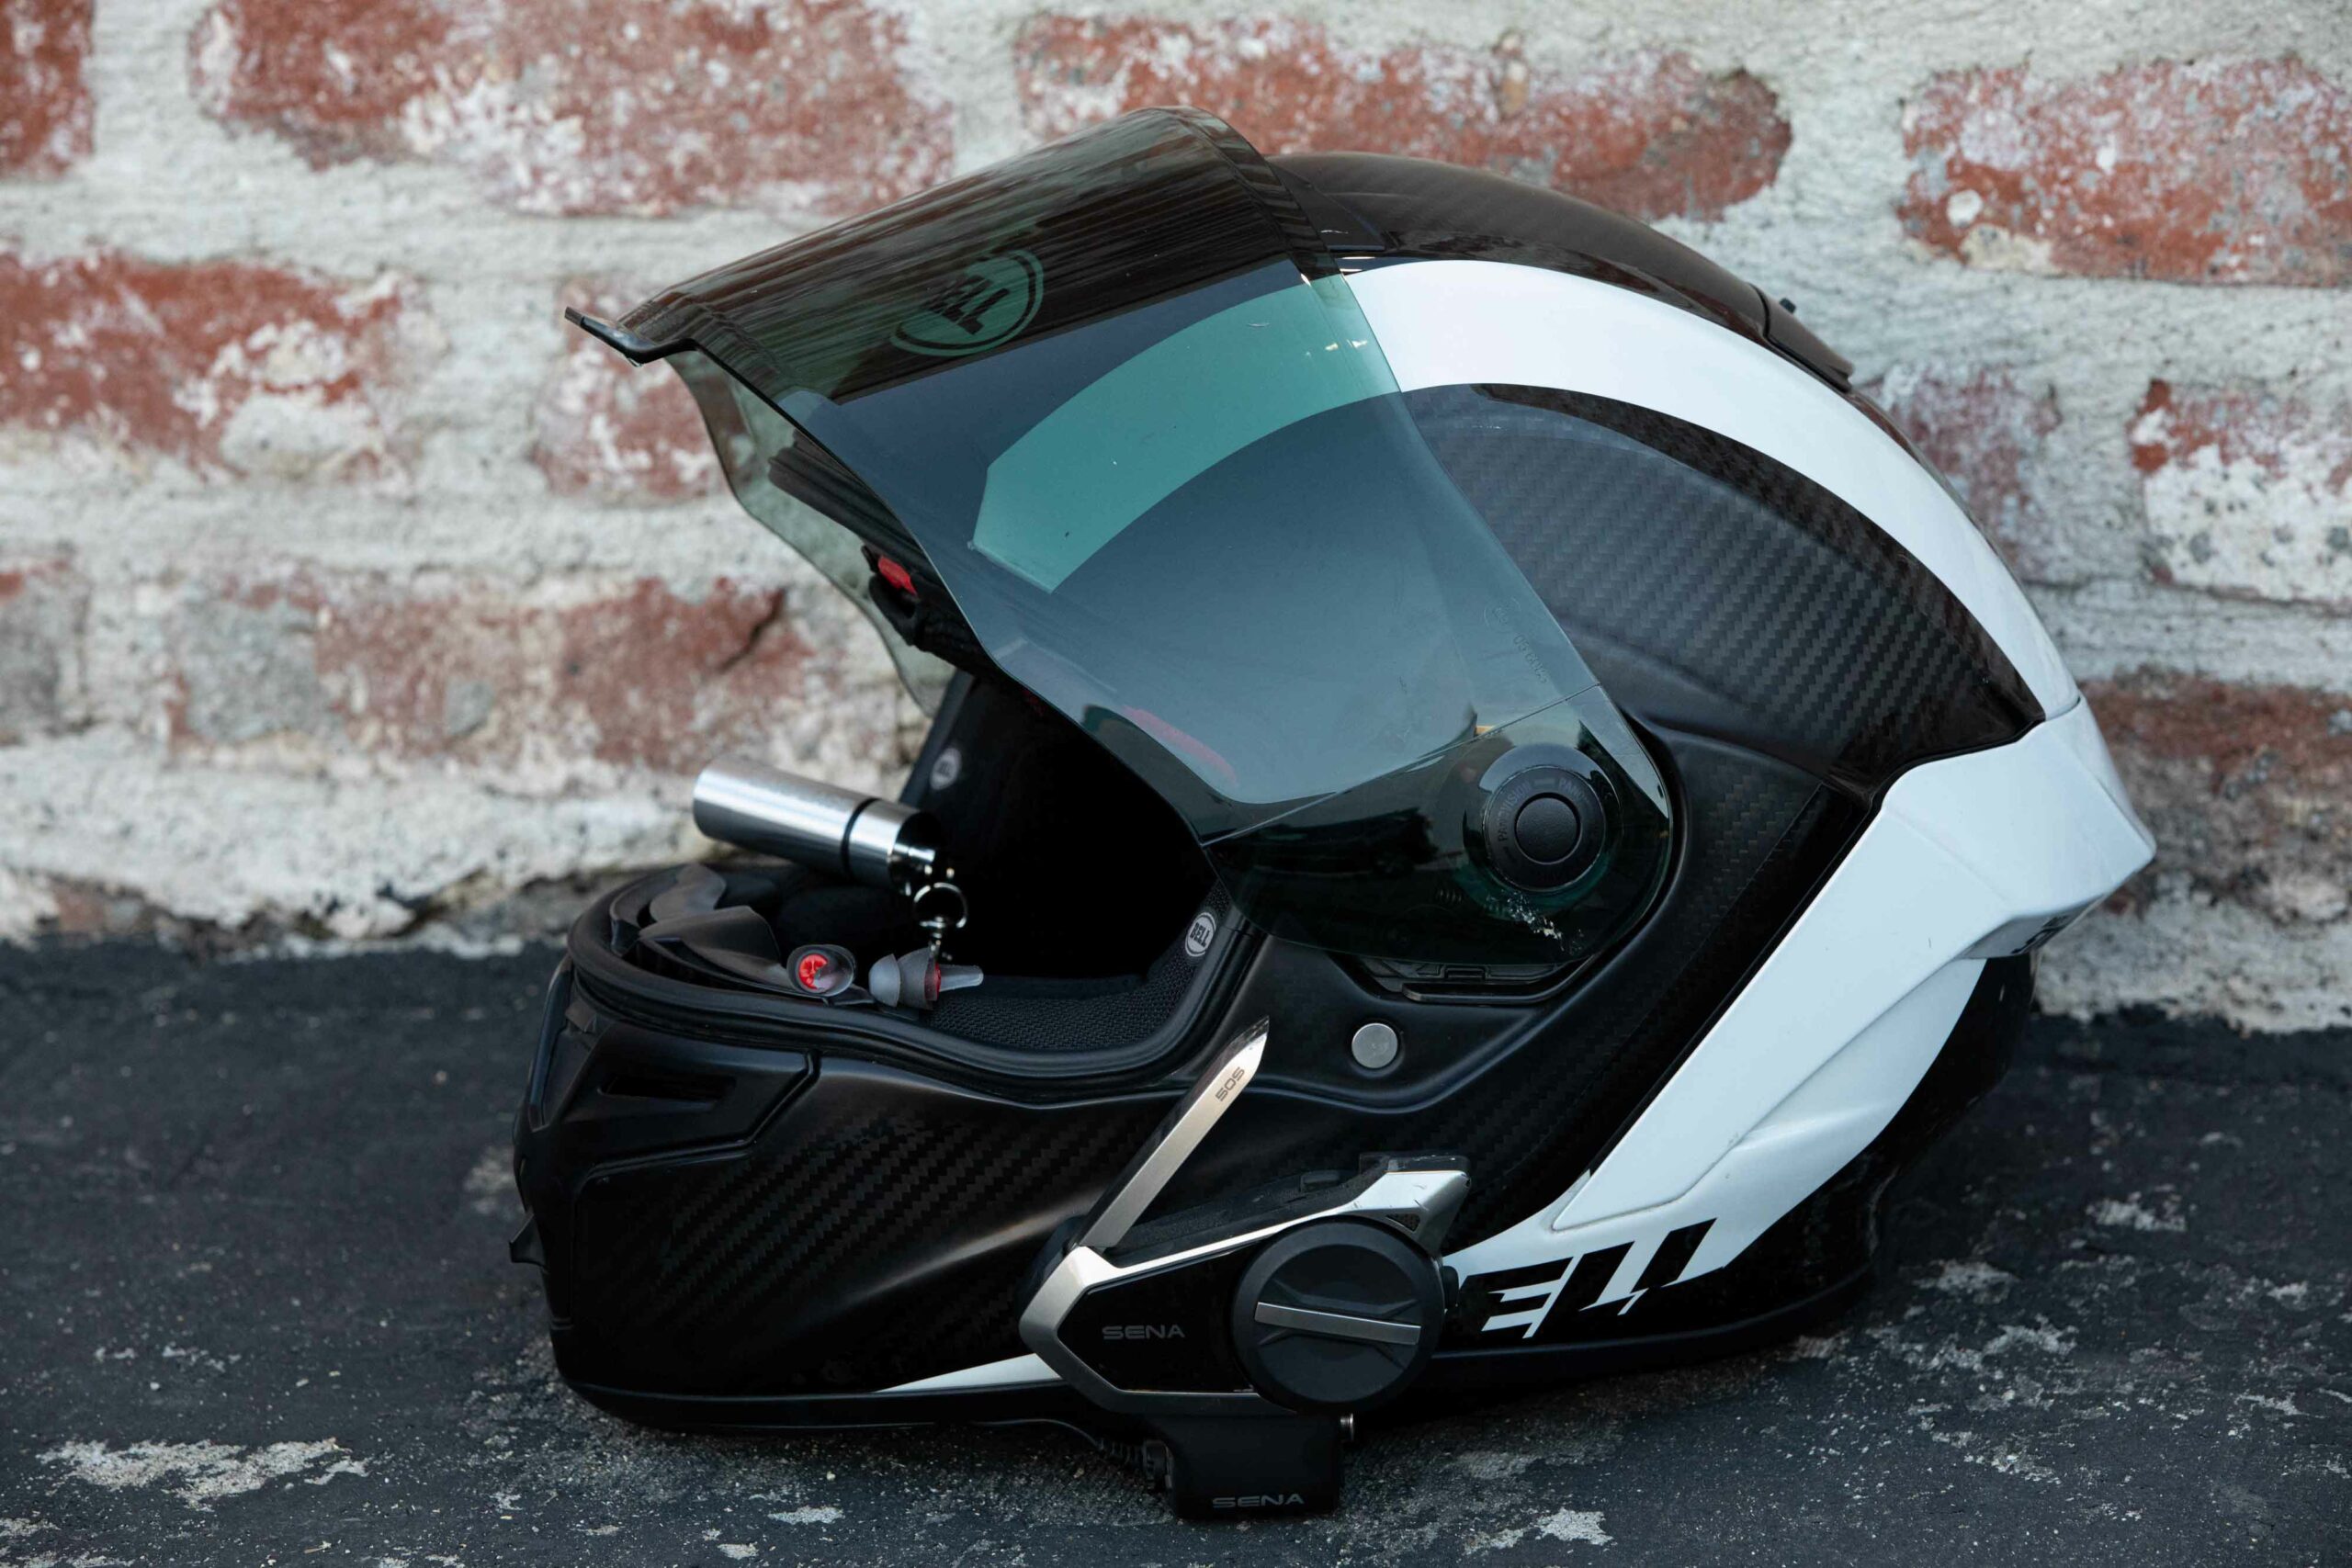 Bell motorcycle helmet with sena bluetooth and earpeace earplugs